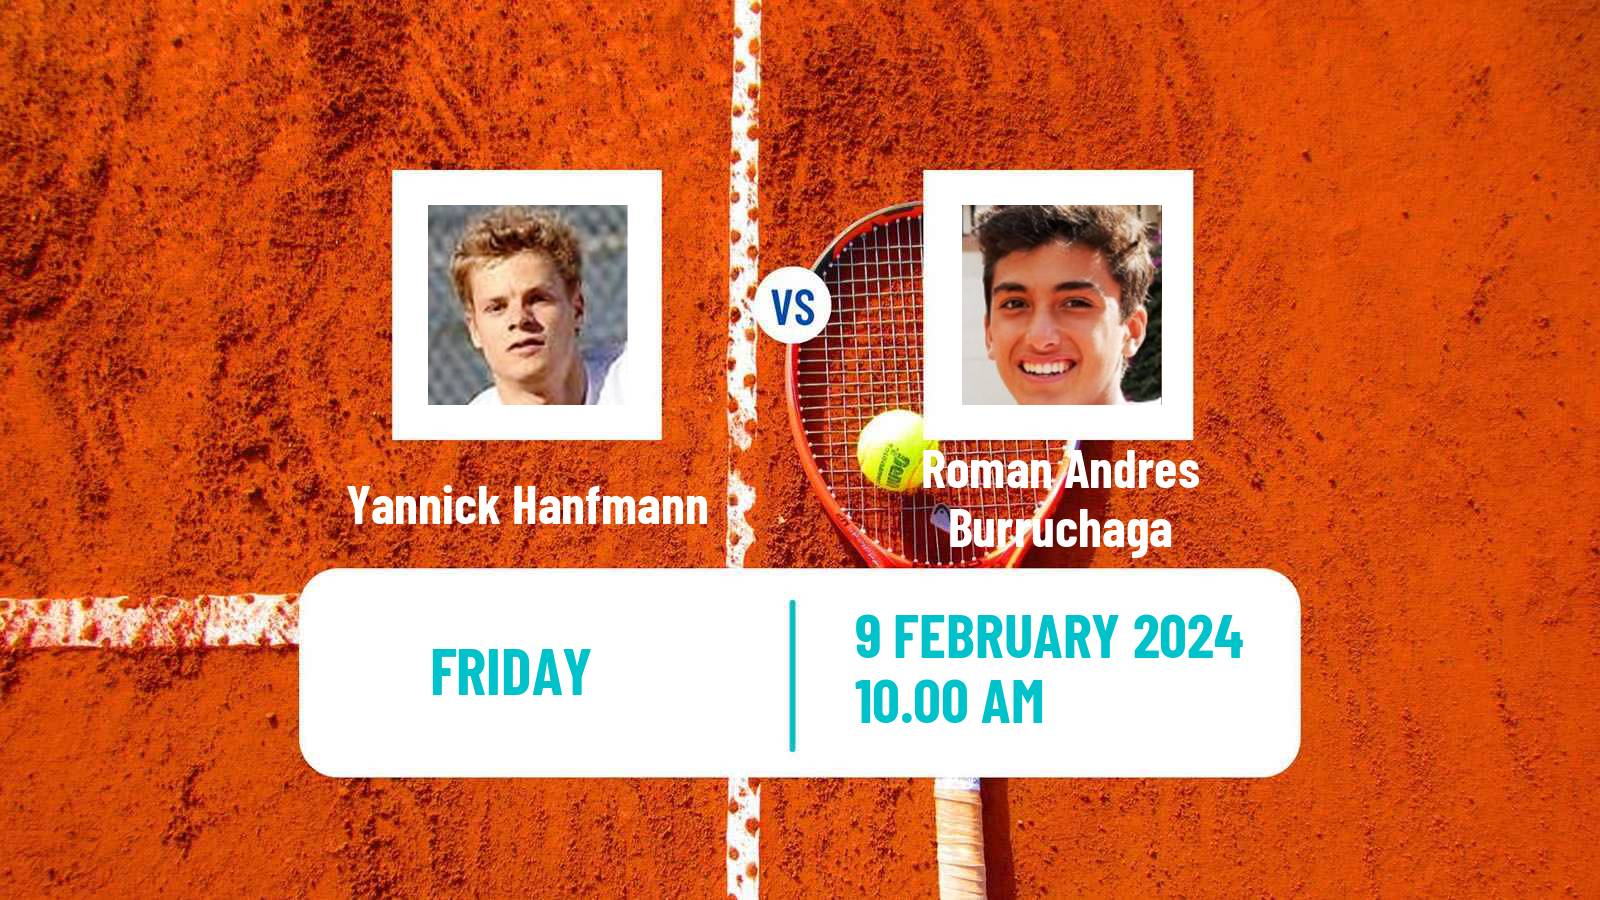 Tennis ATP Cordoba Yannick Hanfmann - Roman Andres Burruchaga